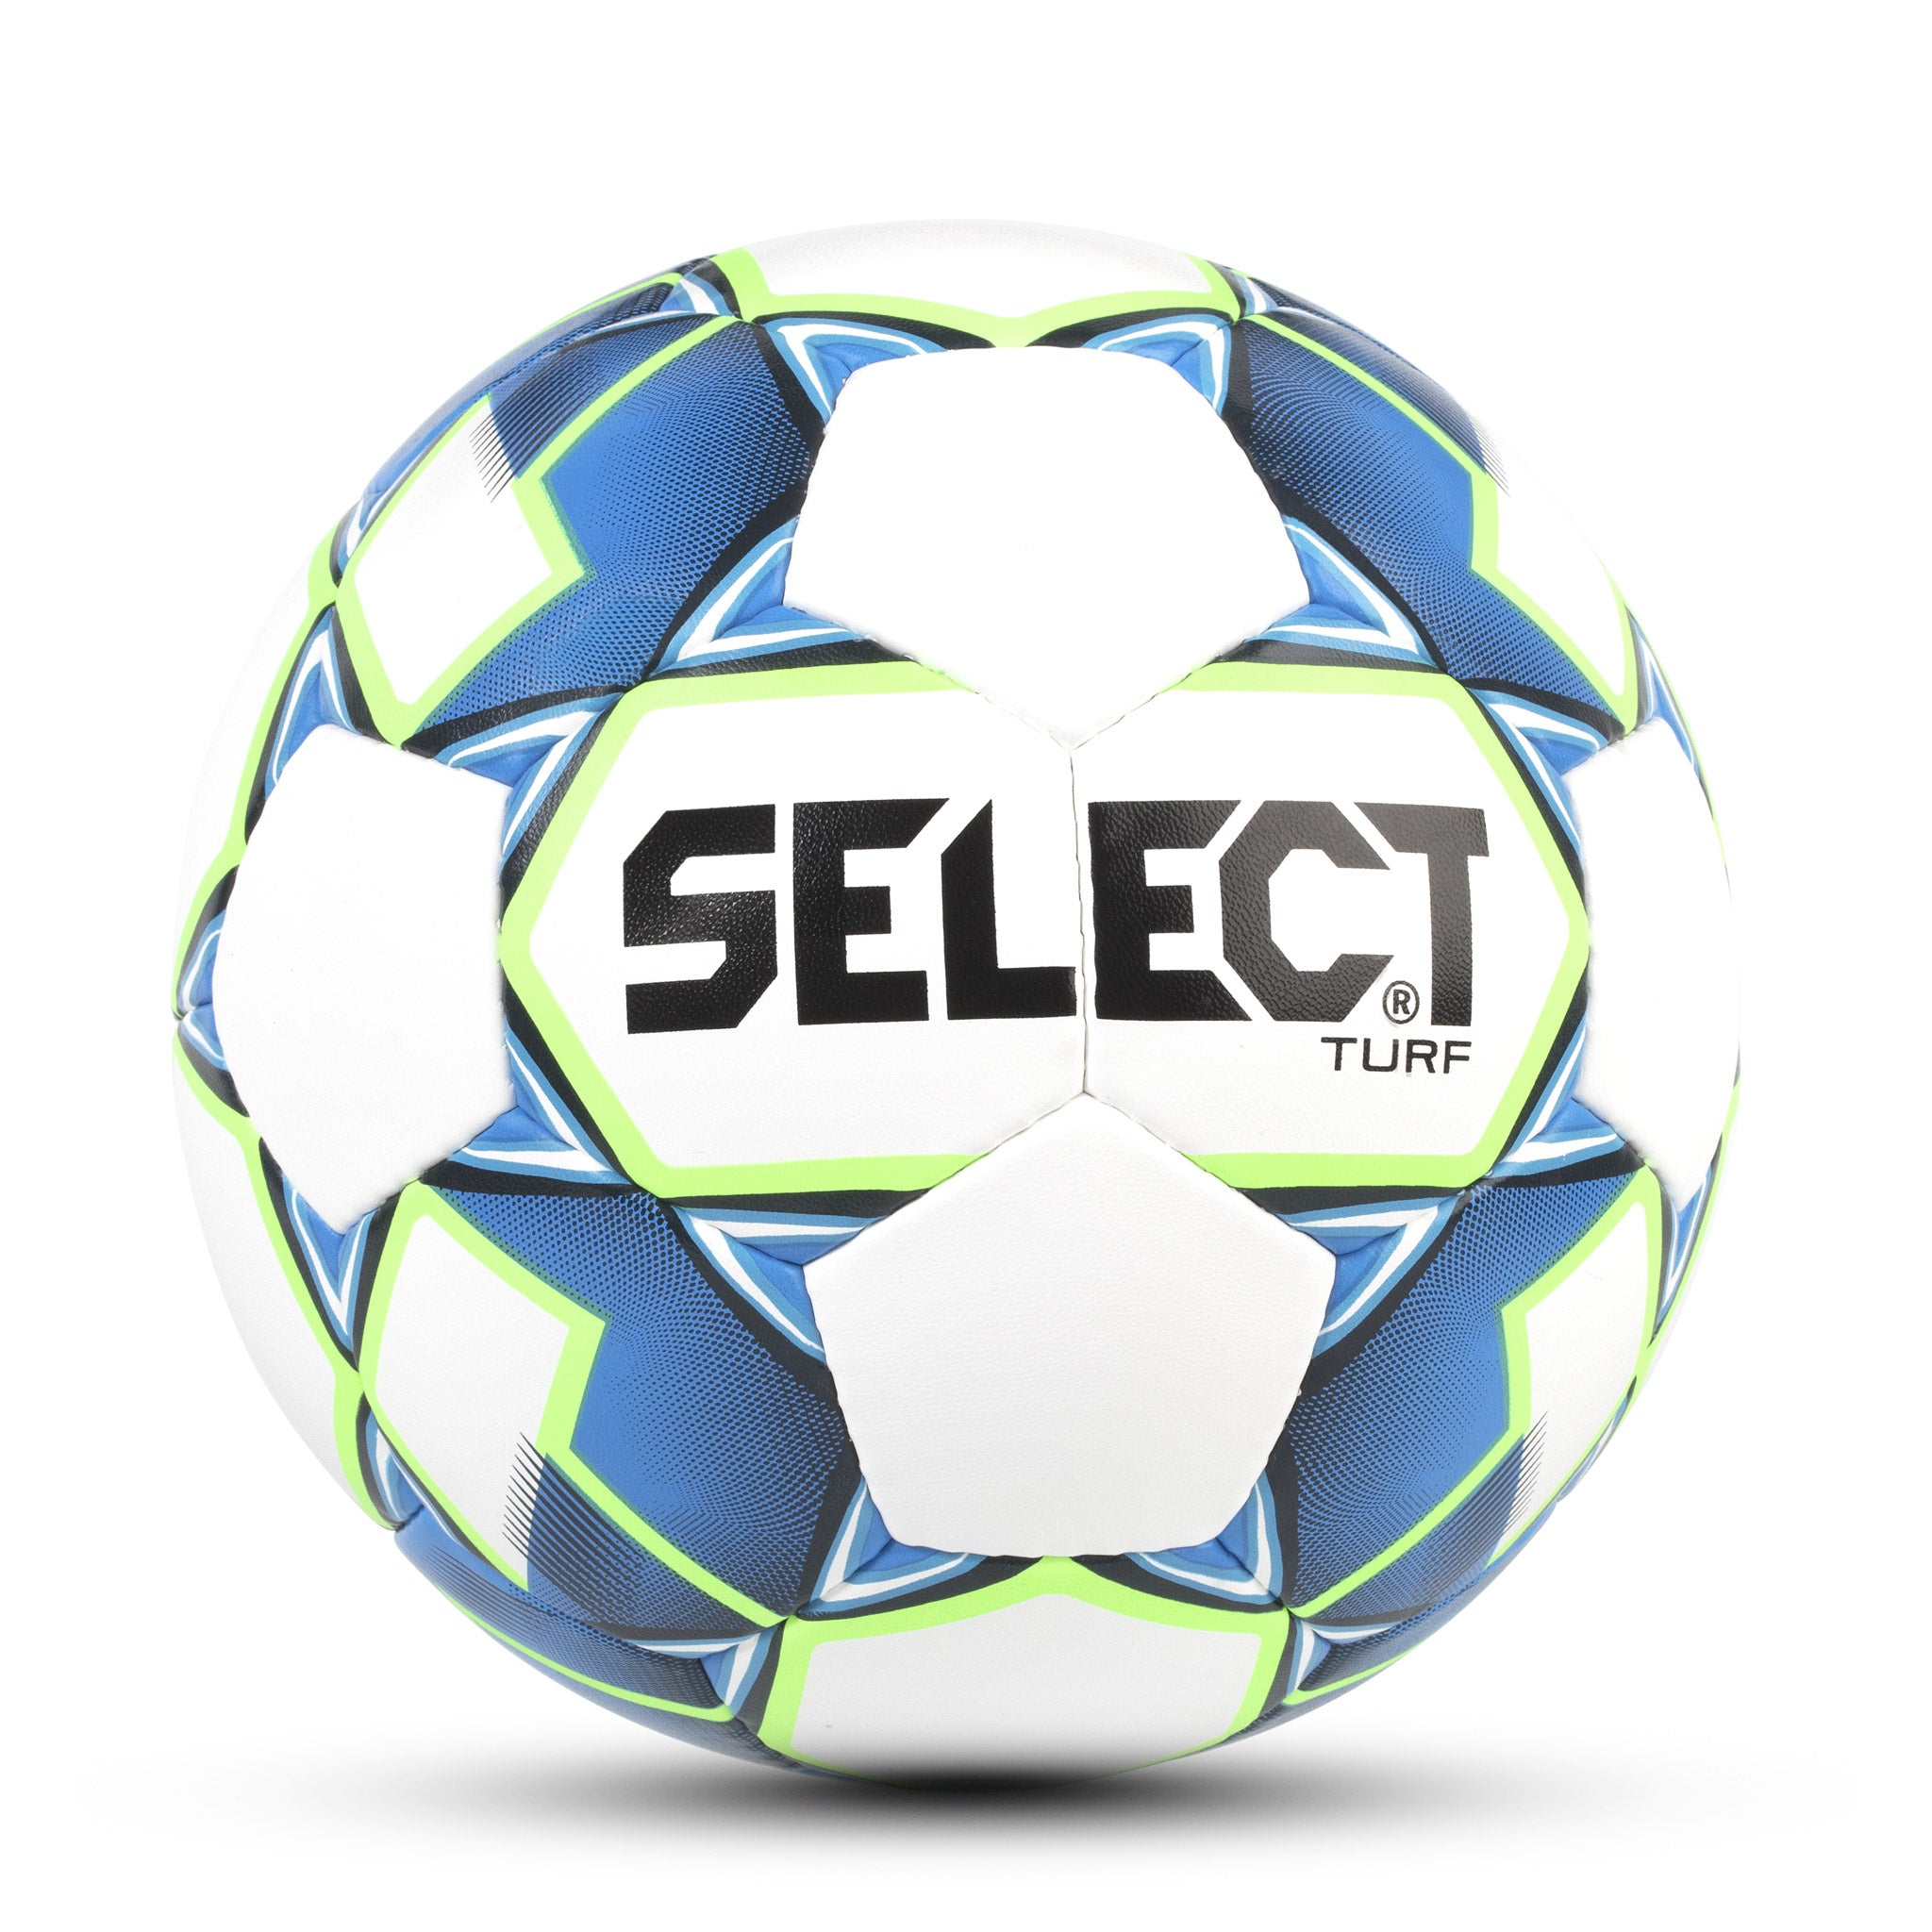 Derbystar Brillant APS 2022 is official match ball of Bundesliga 2022